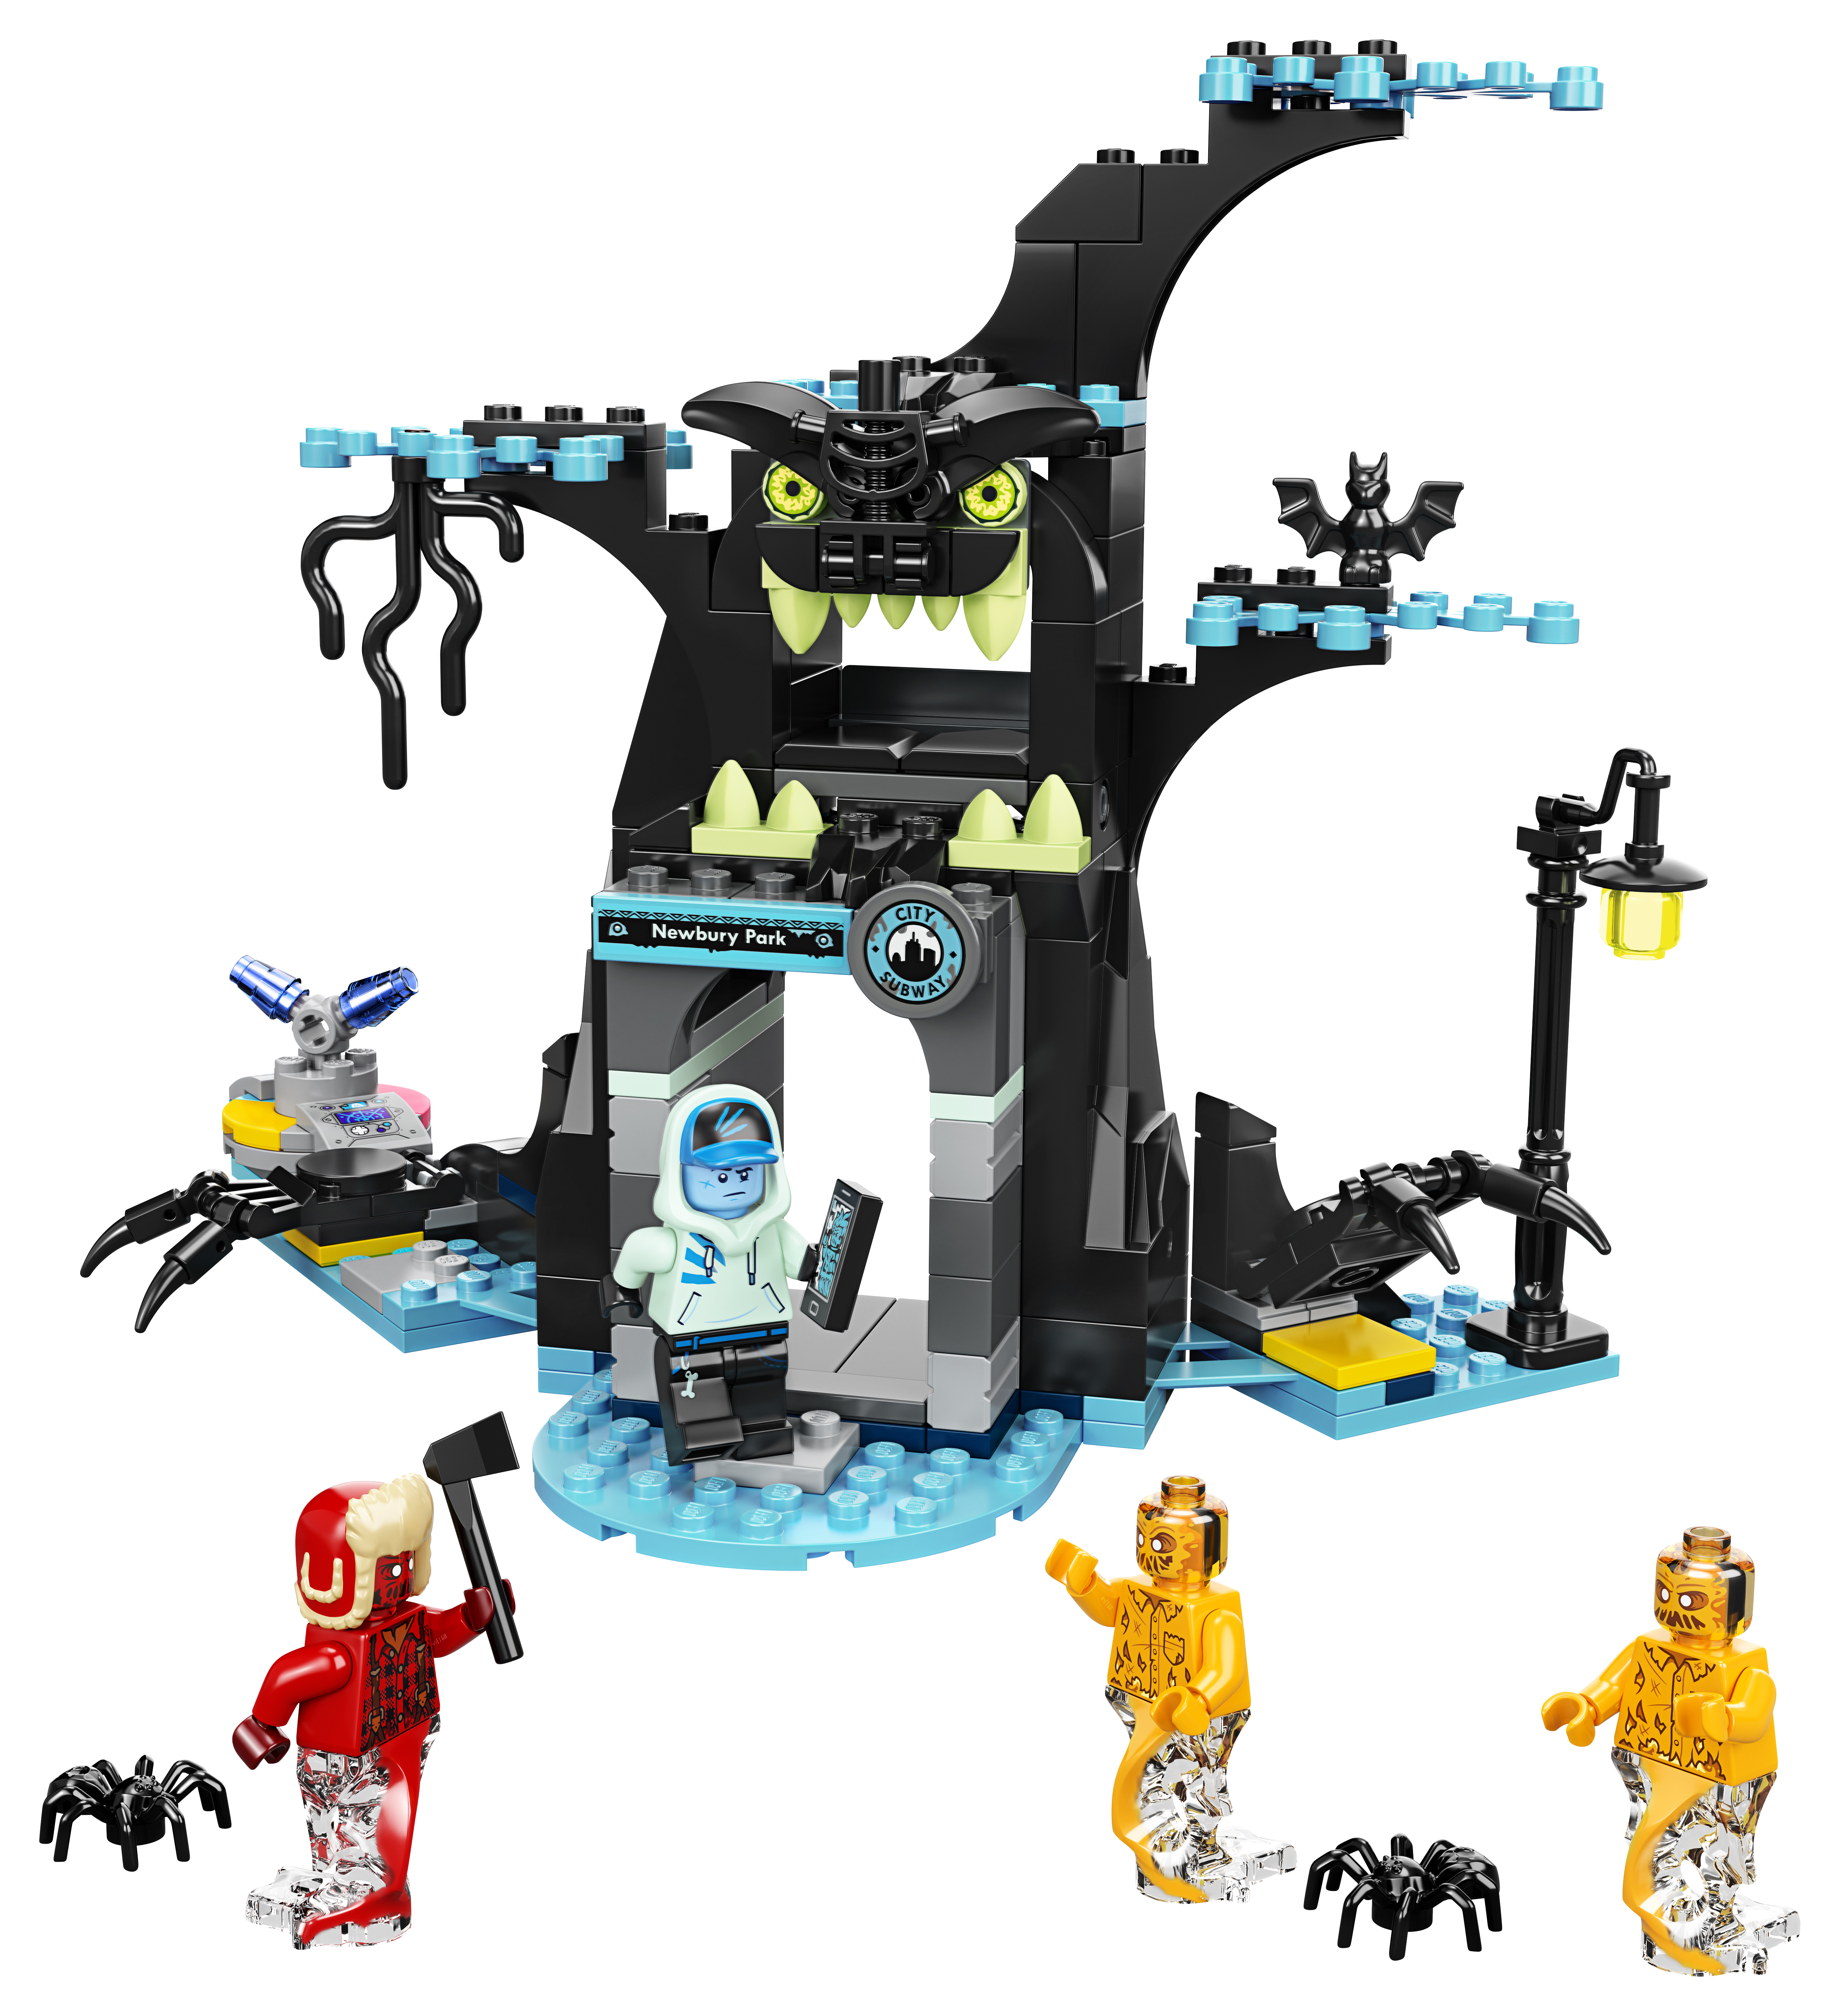 LEGO Hidden Side Portal - 70427